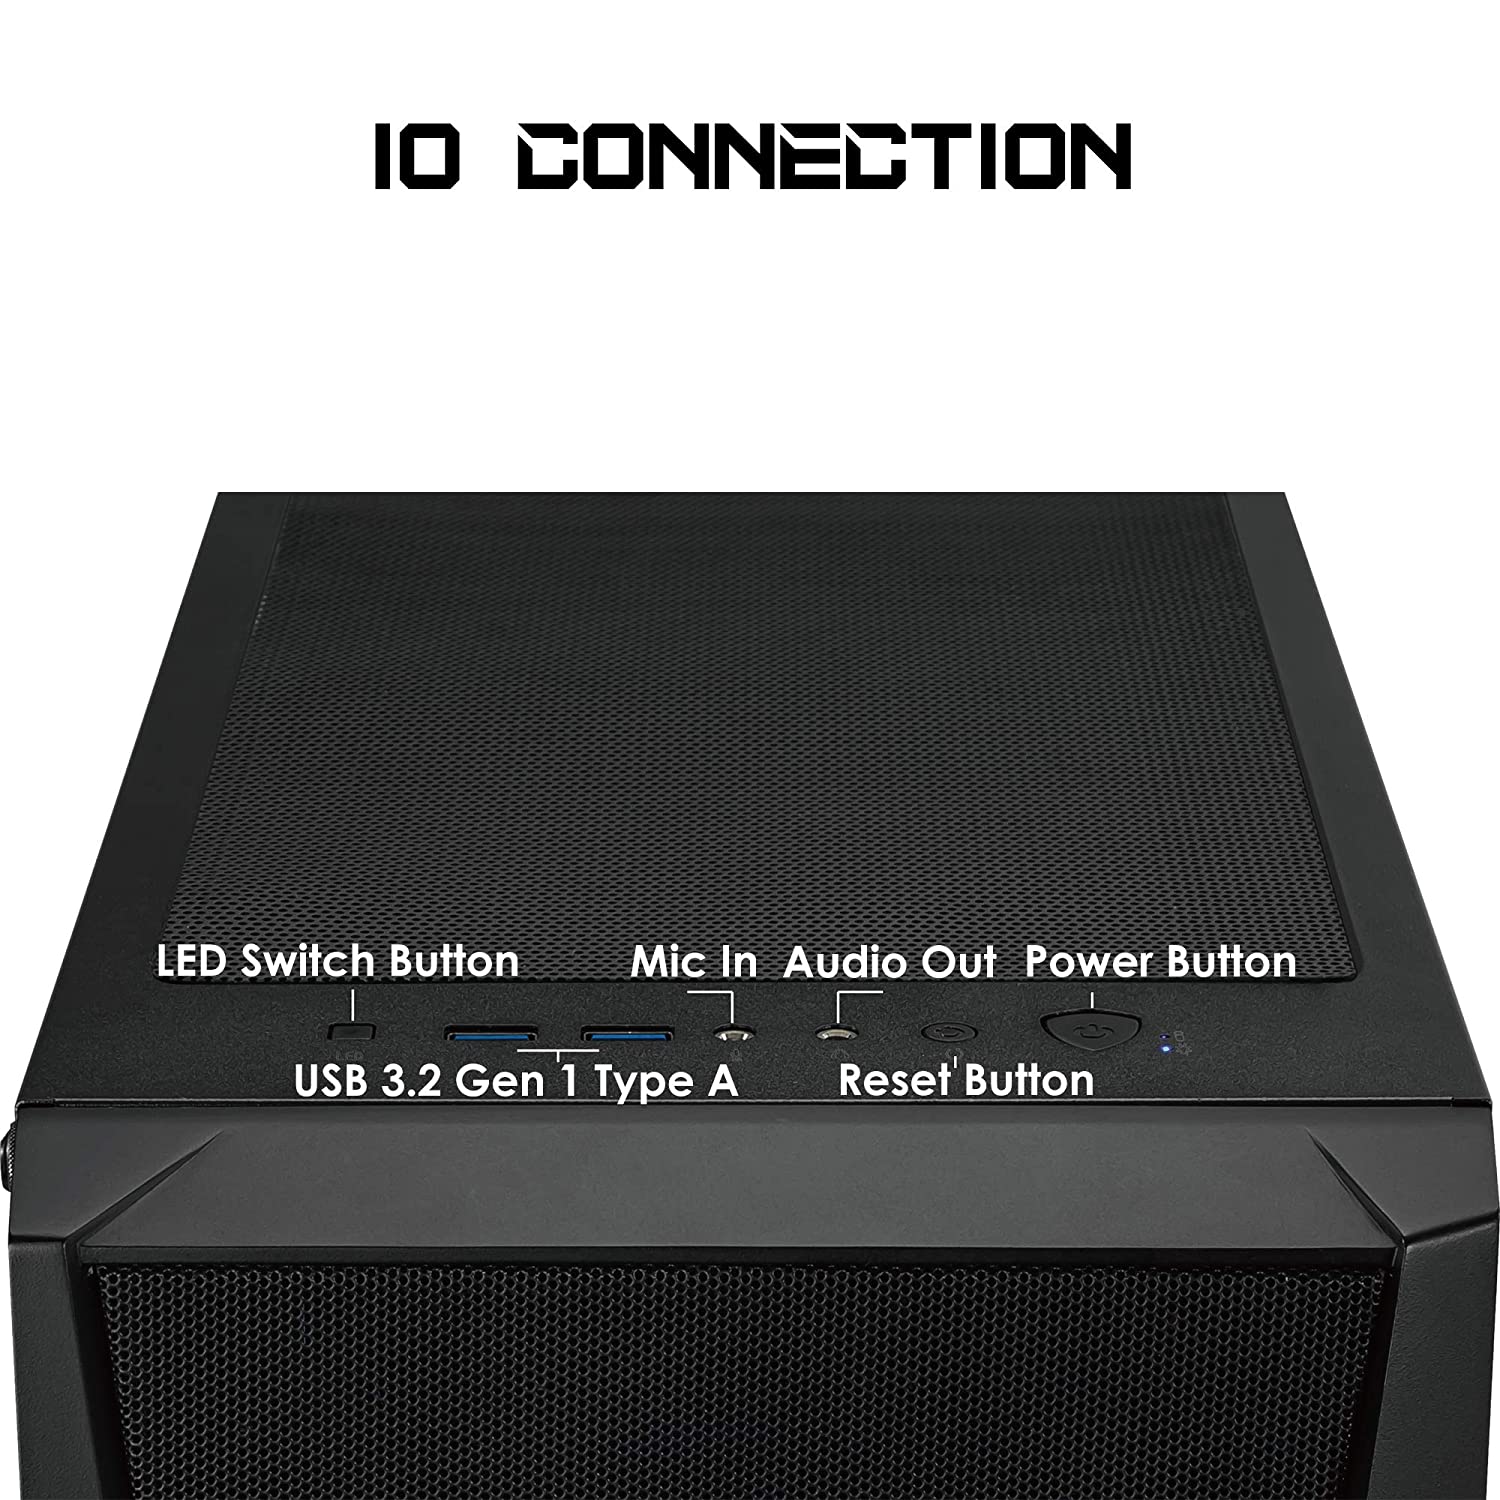 MSI MAG FORGE 100R Mid Tower Gaming PC Case (Black, 2 x 120mm ARGB fans, 1  x 120mm Rear fan - Shedmart